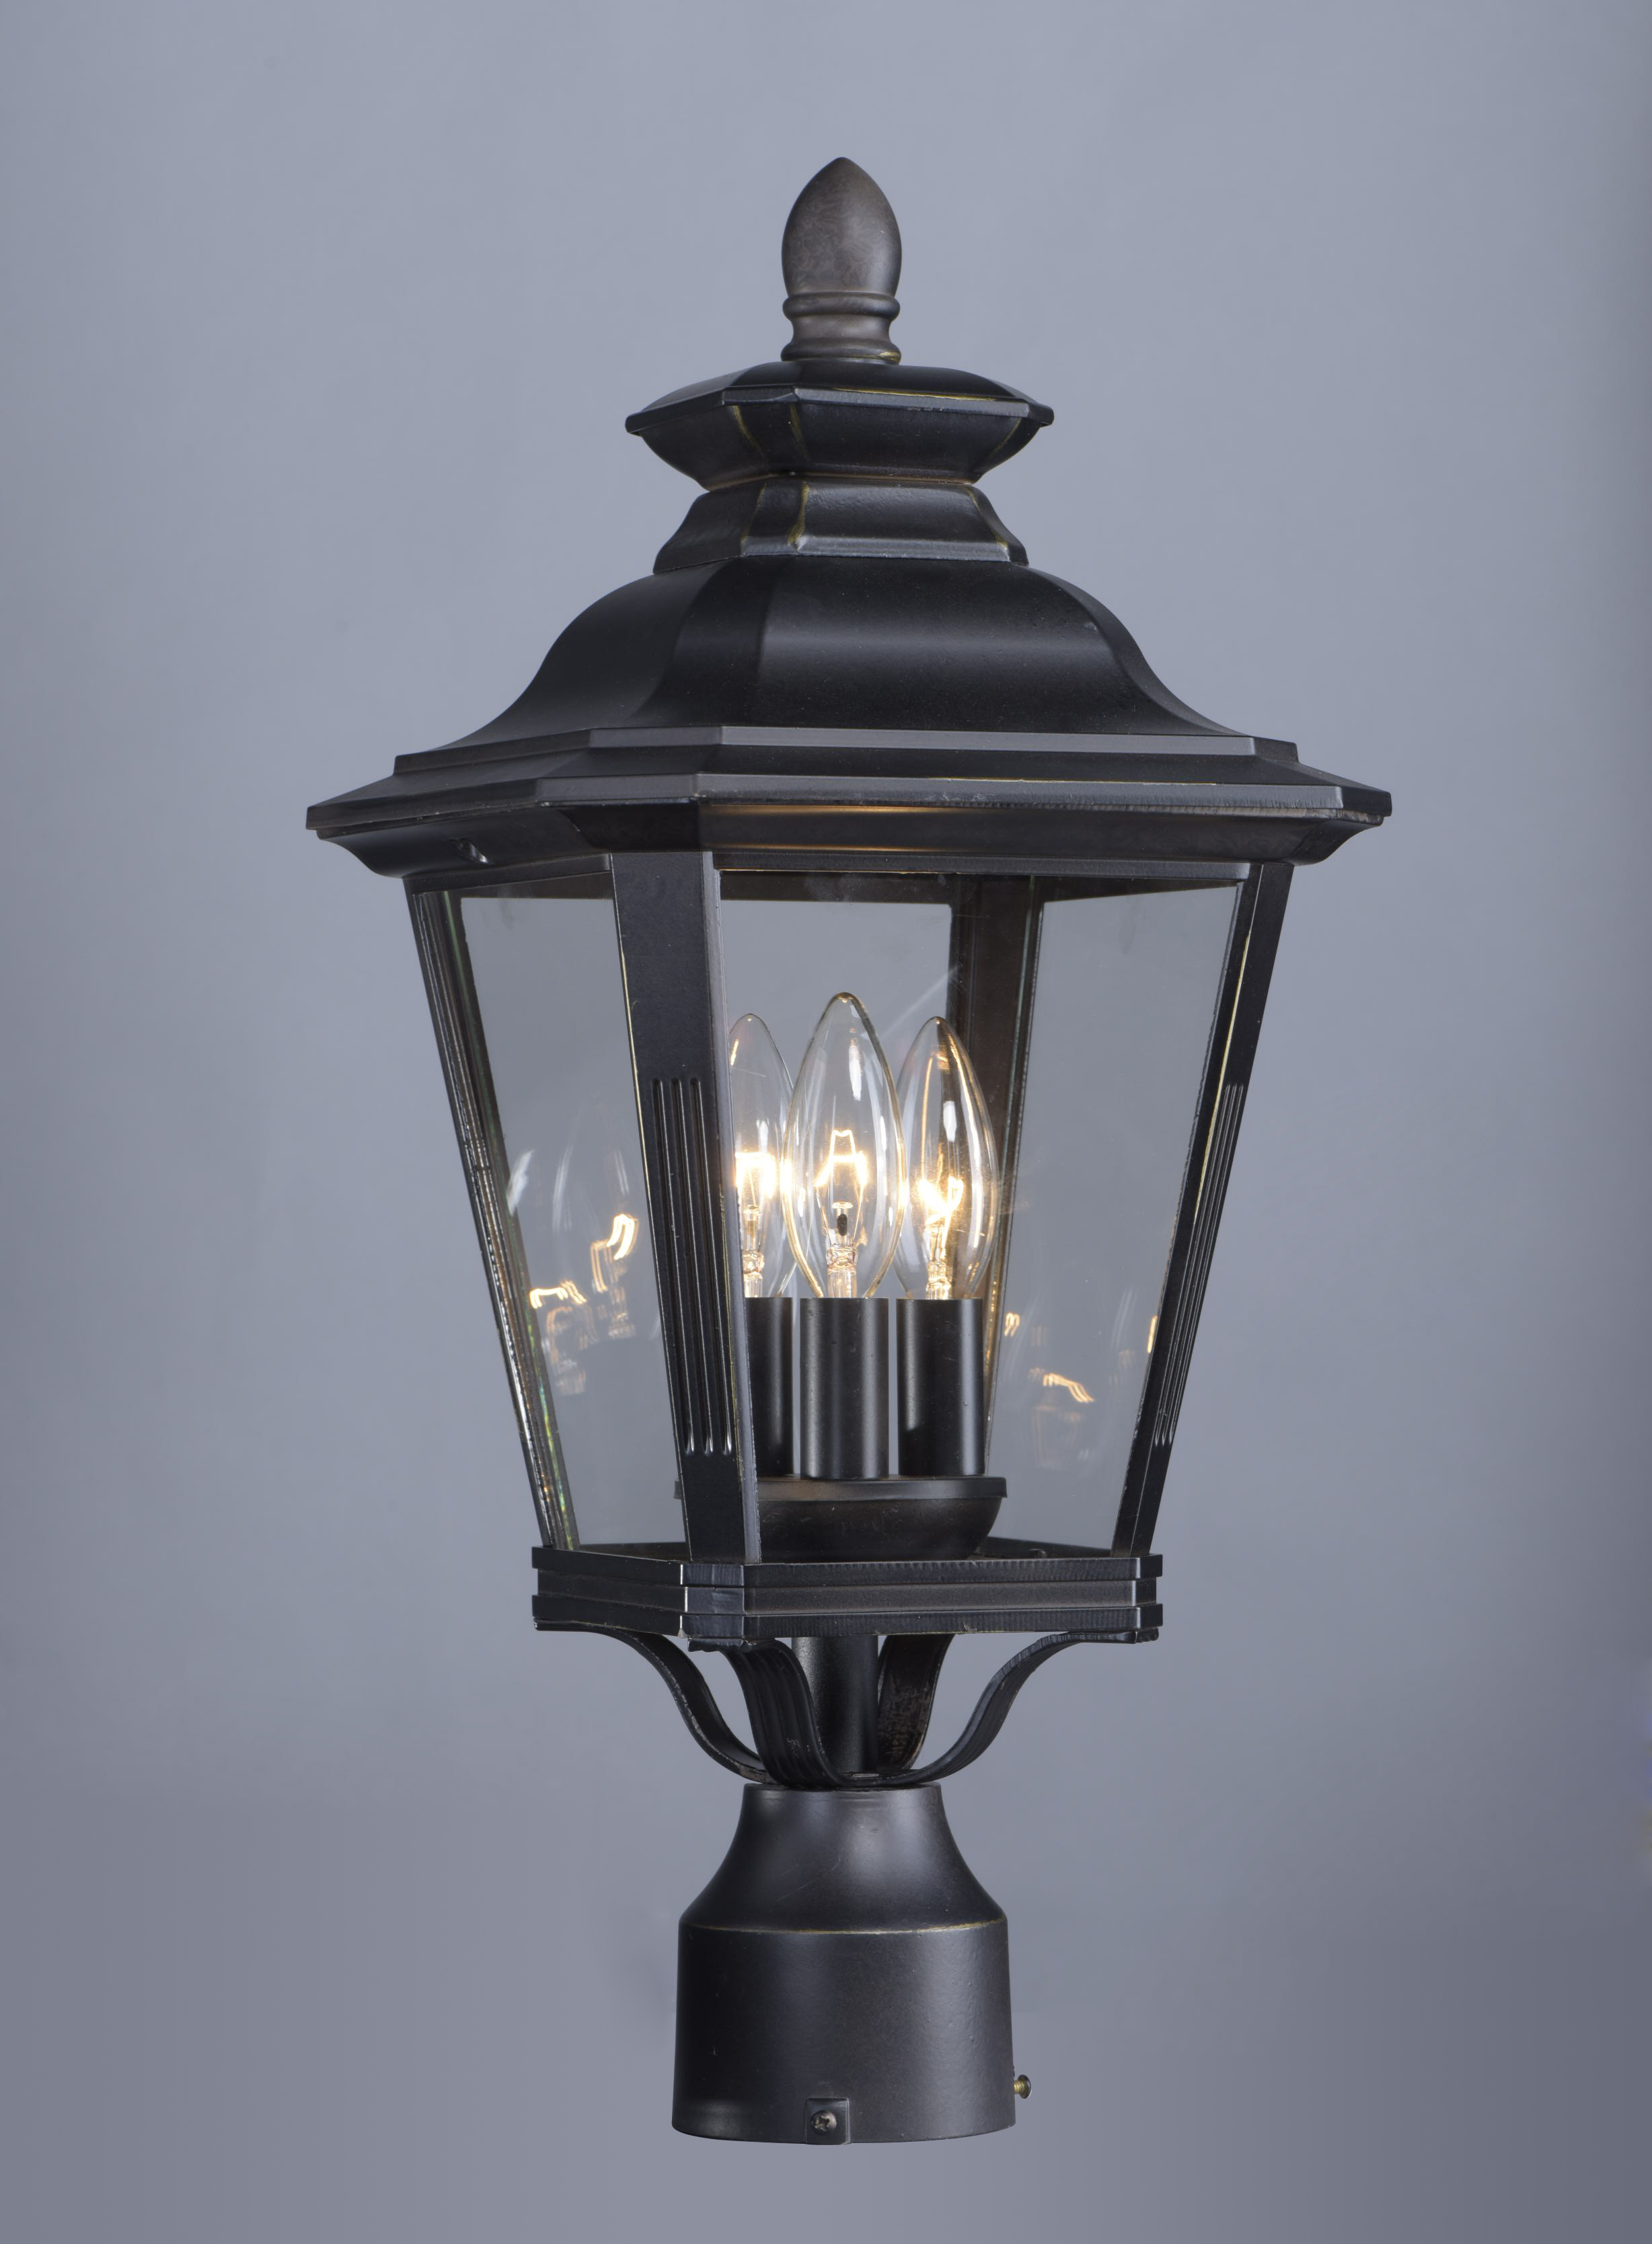 Light Post Images : Lichfield Lamp Post | Boehriwasuim Wallpaper